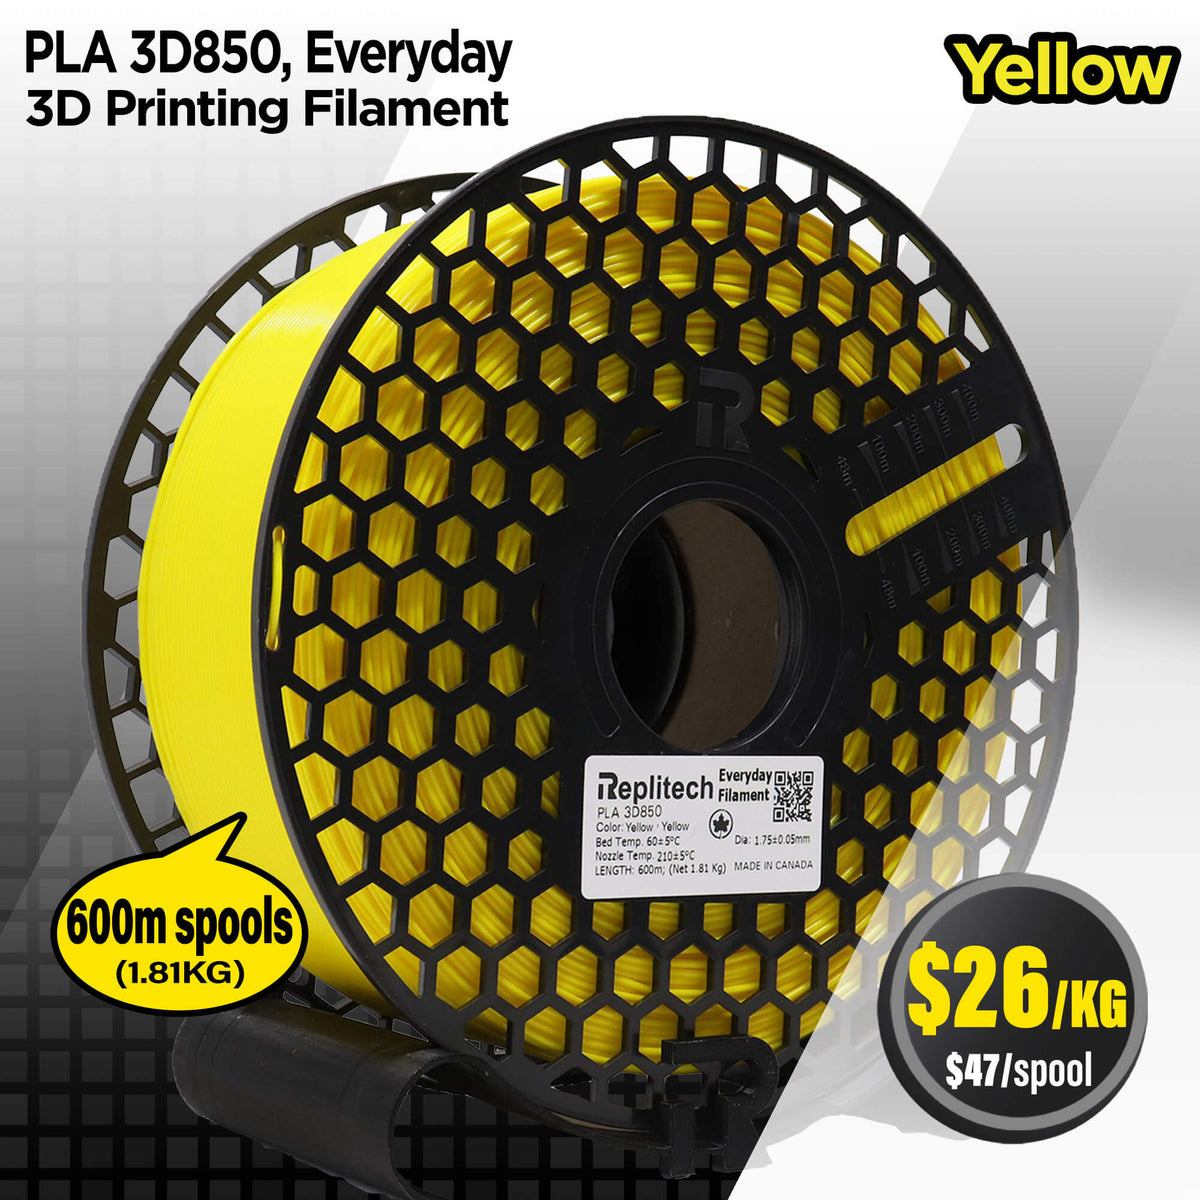 PLA 3D850 Everyday Yellow